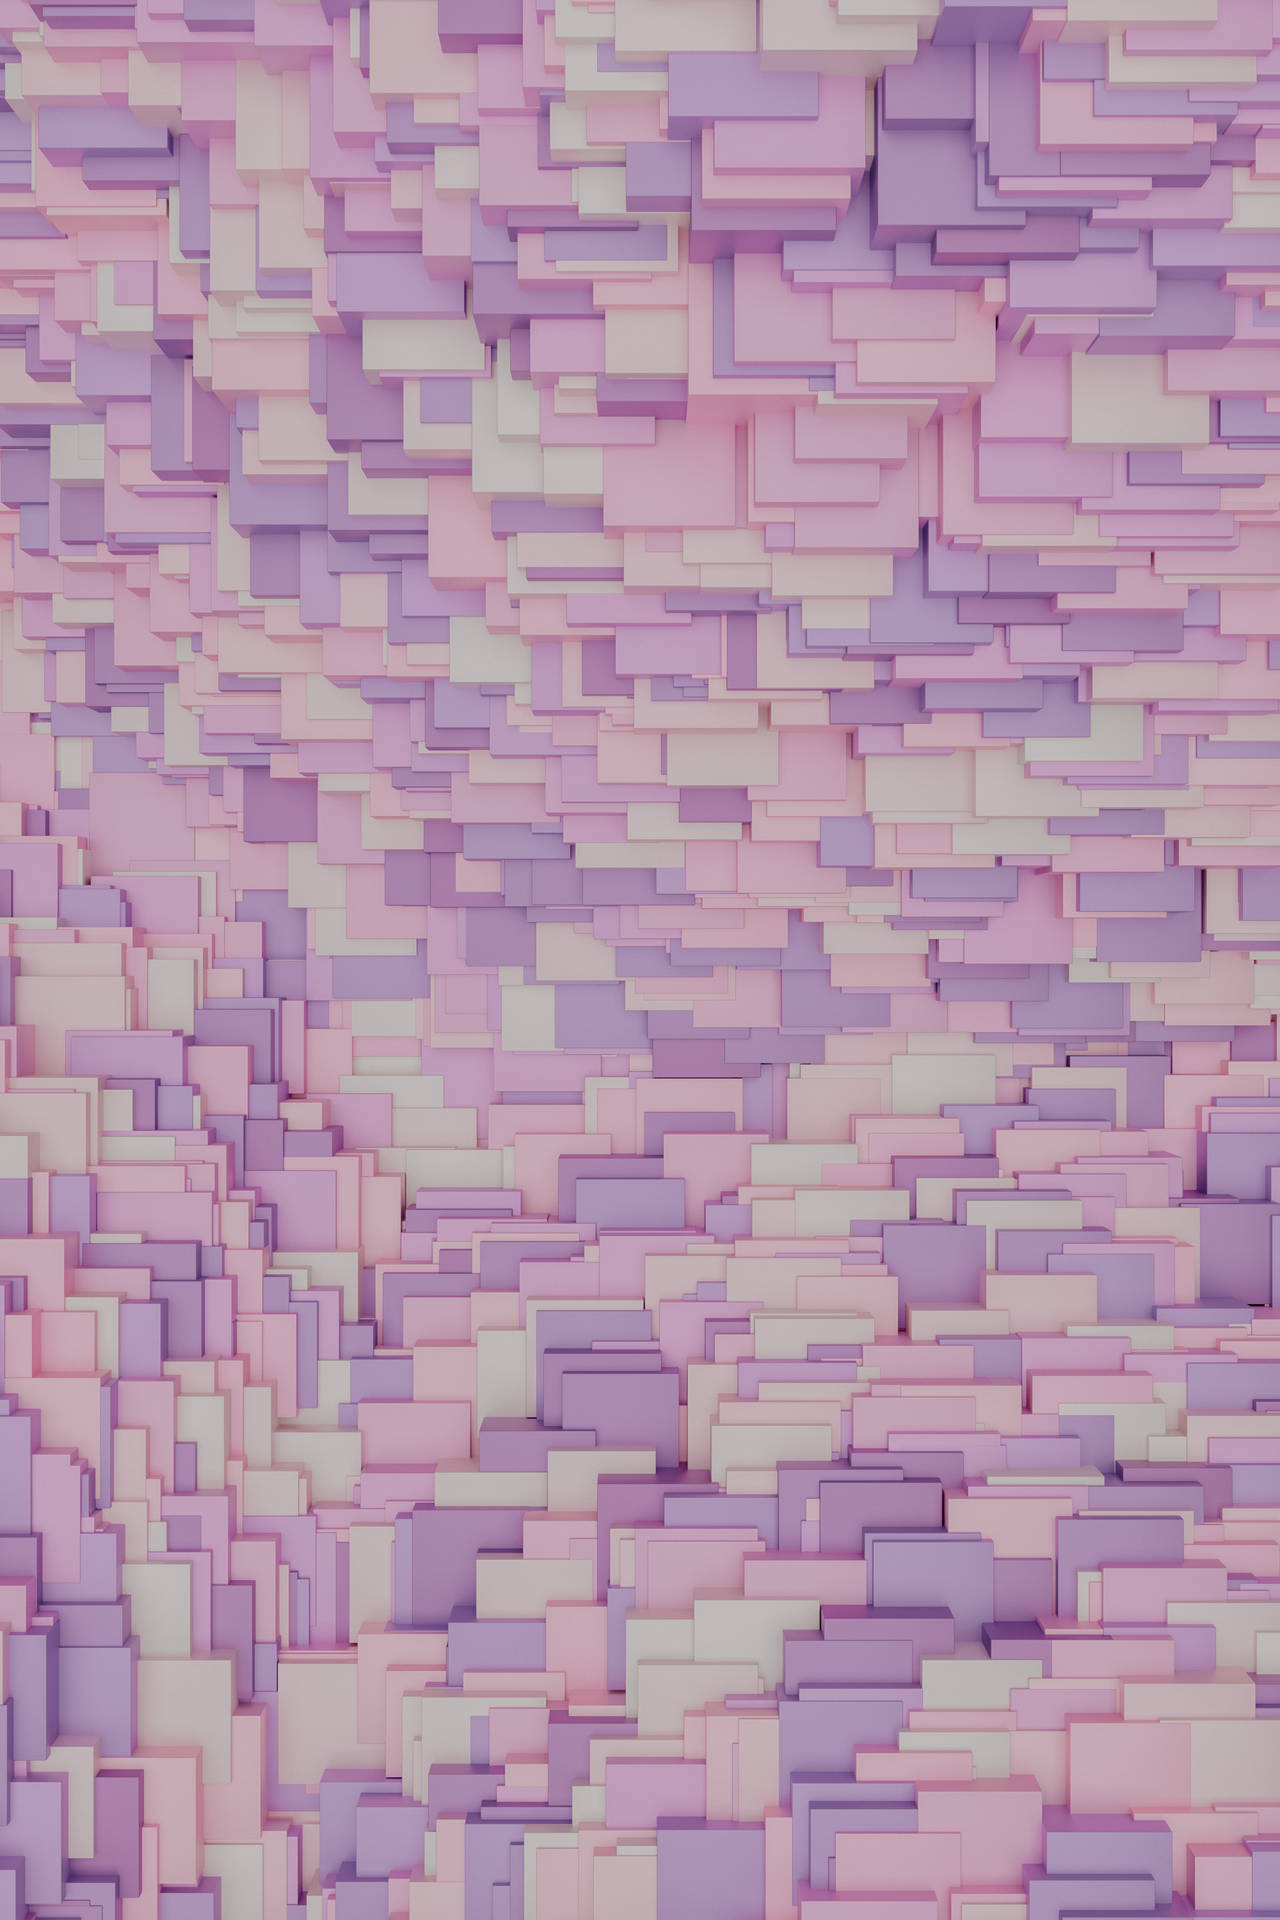 Lavender Aesthetic 3d Blocks Texture Wallpaper